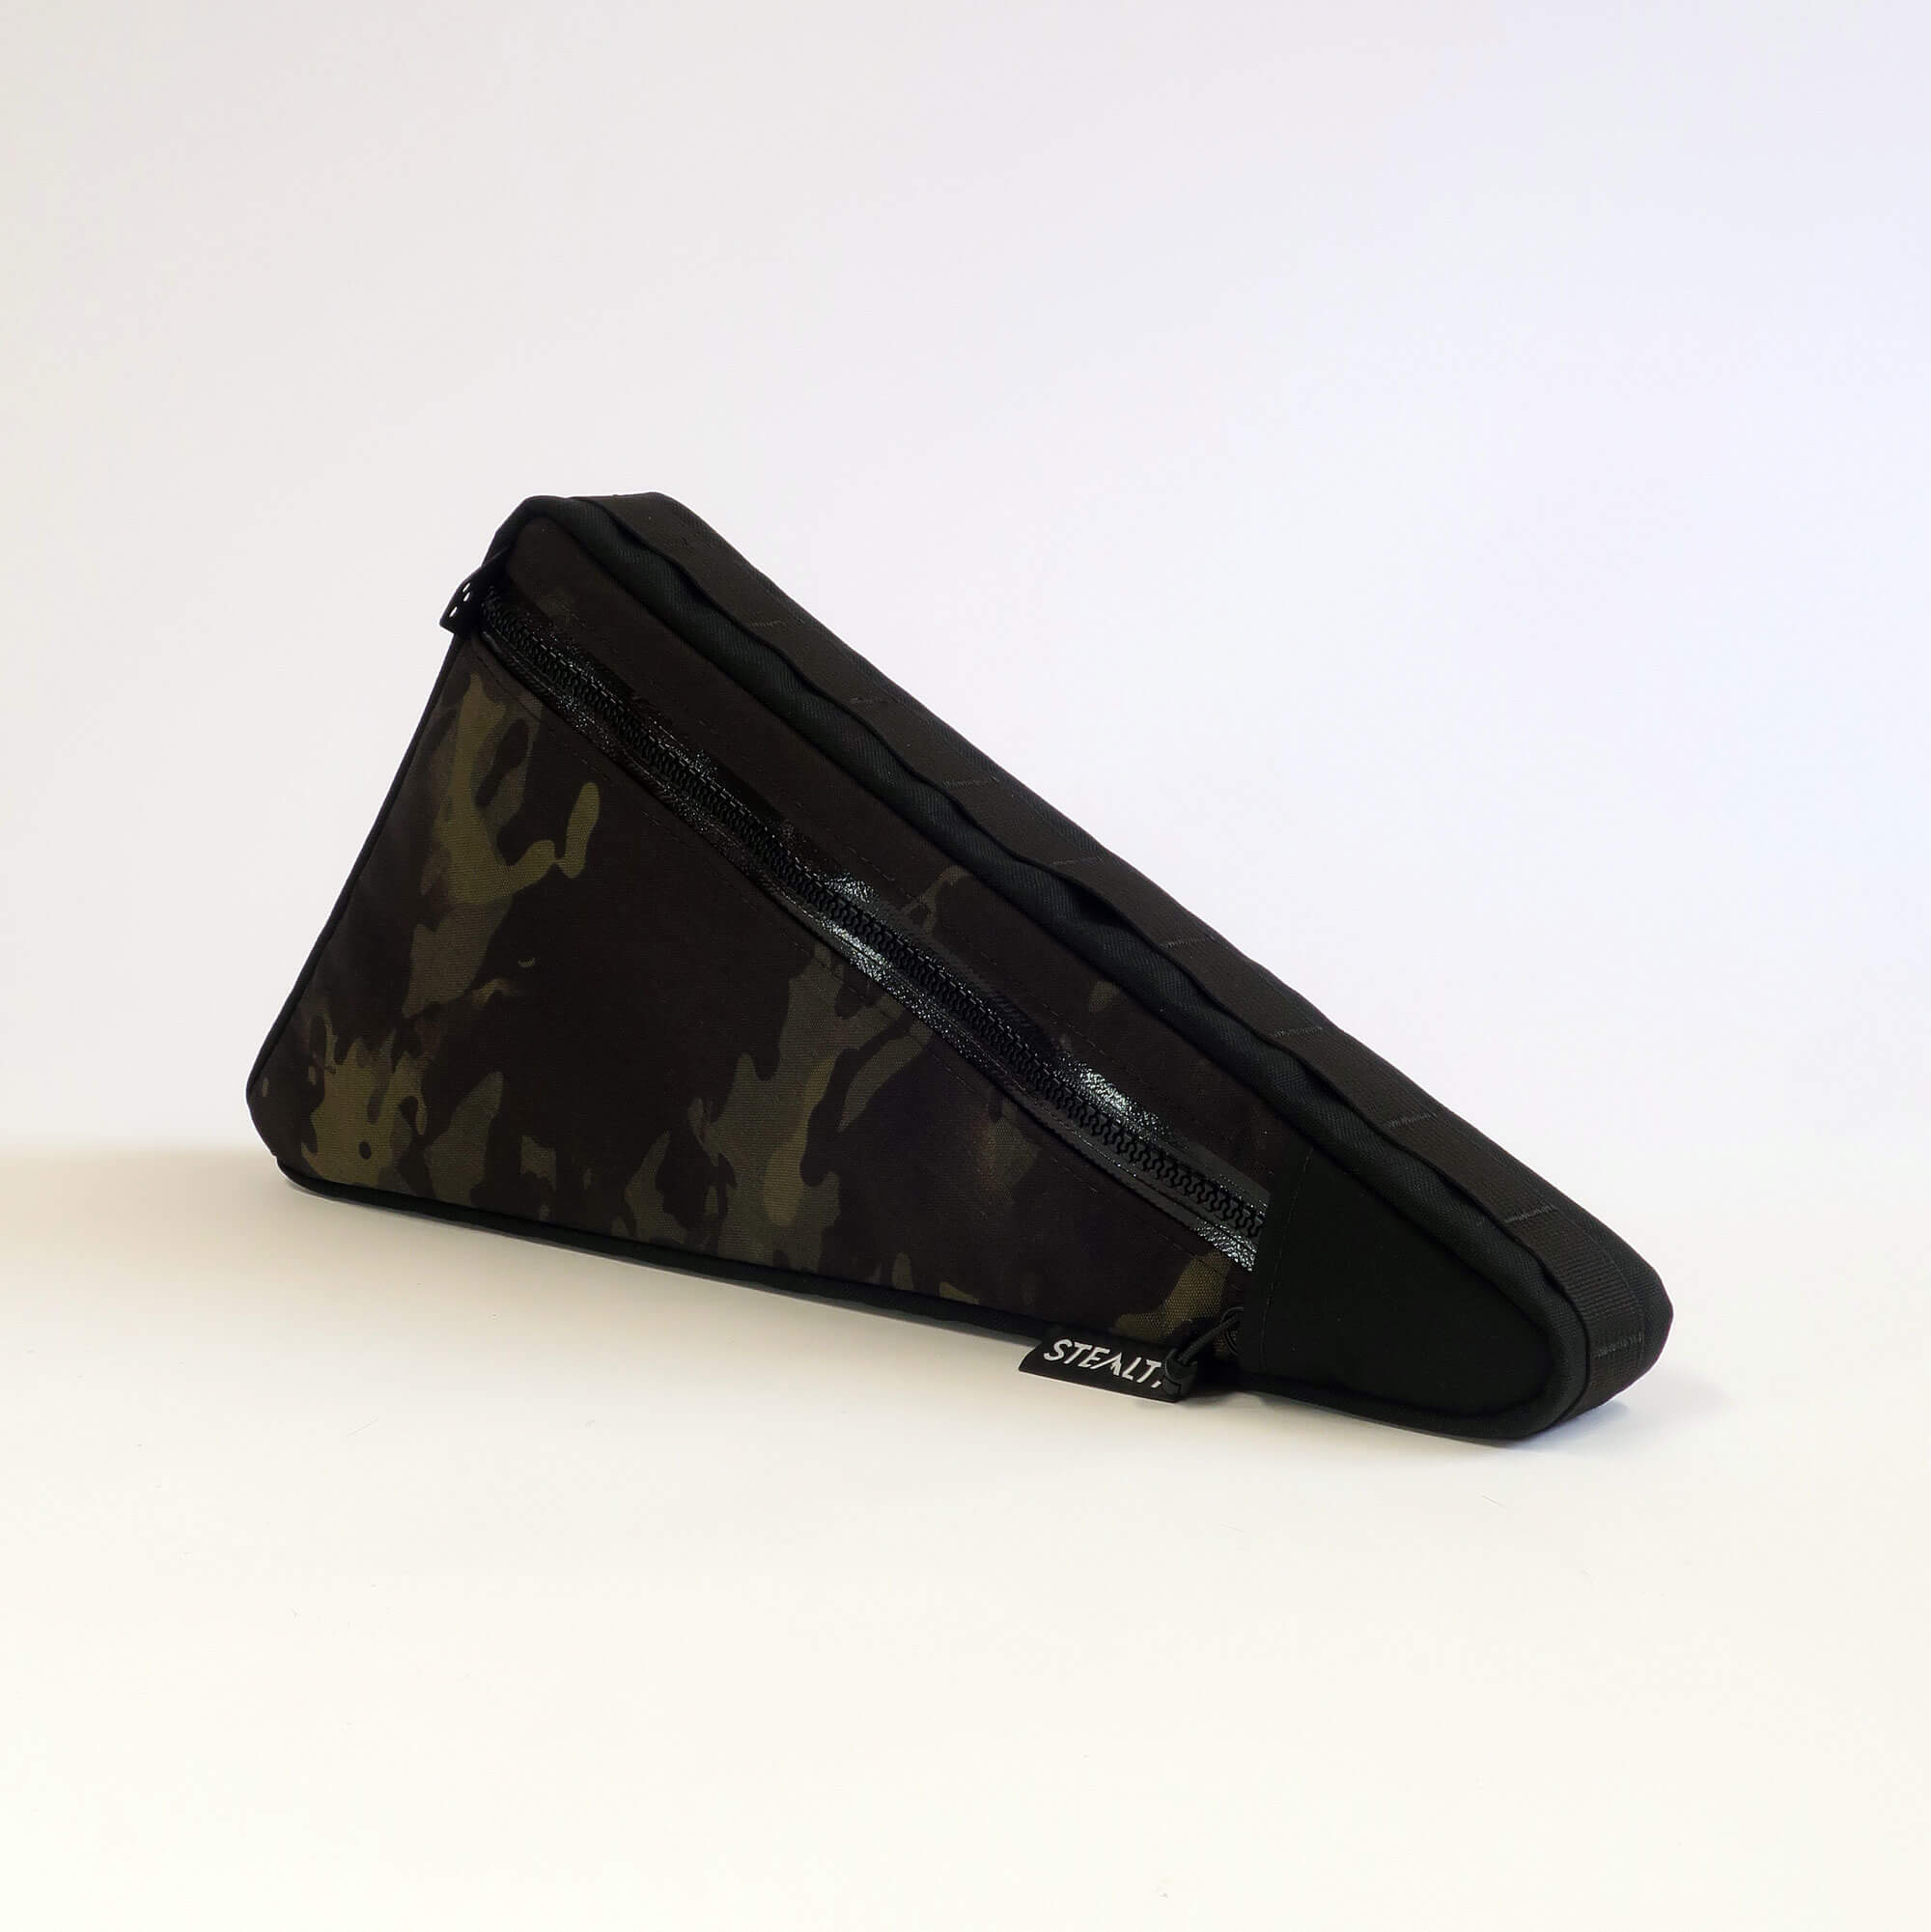 Custom single zip multicam black frame bag